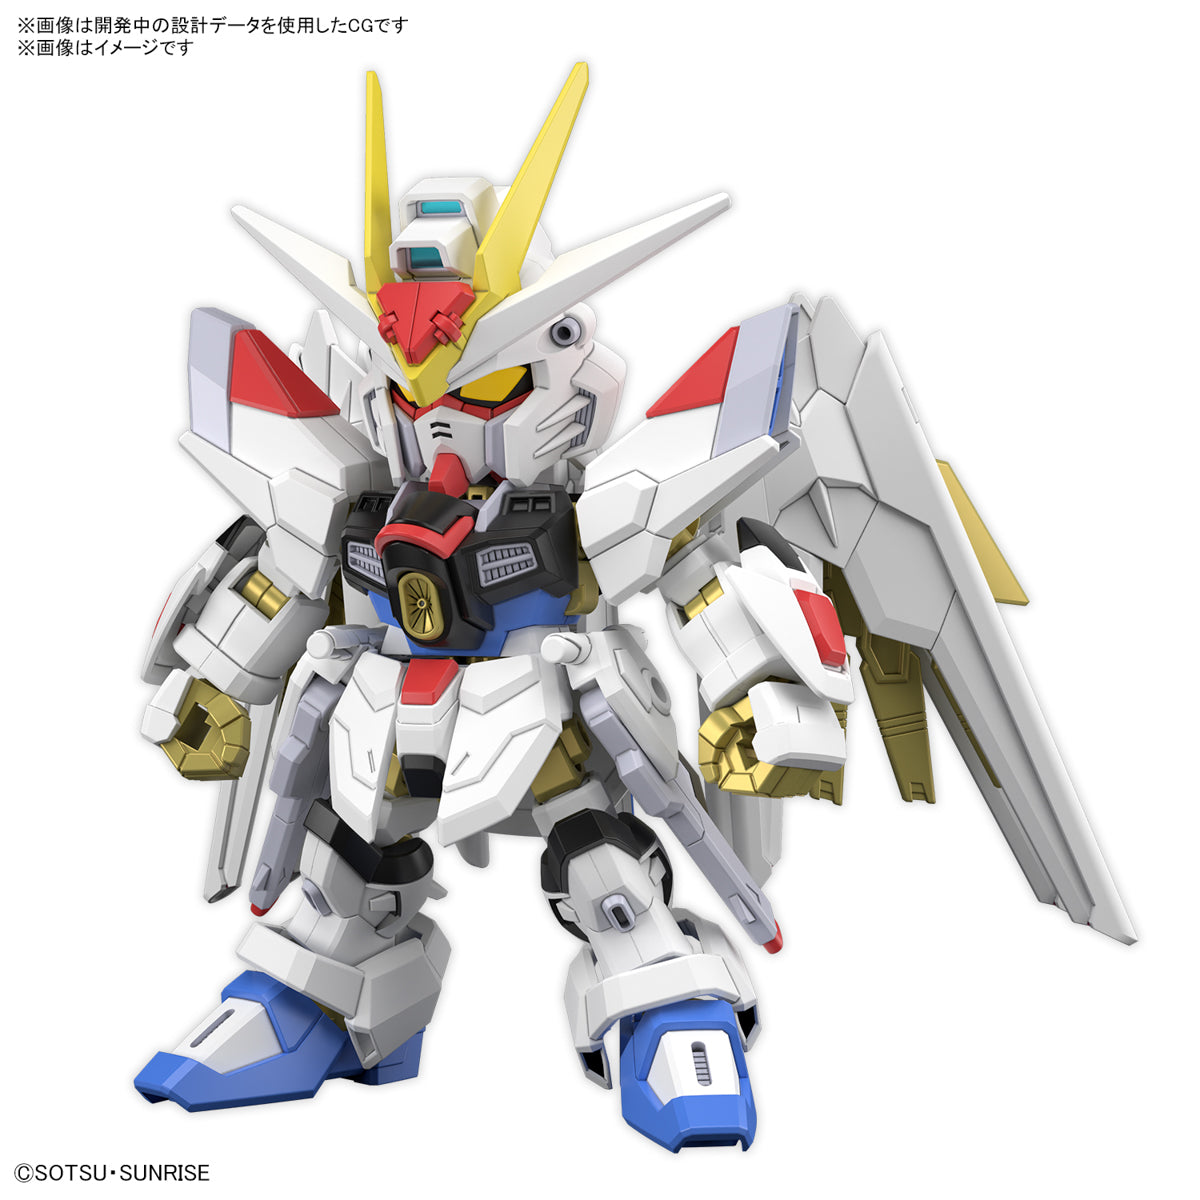 SD Gundam Cross Silhouette Mighty Strike Freedom Gundam